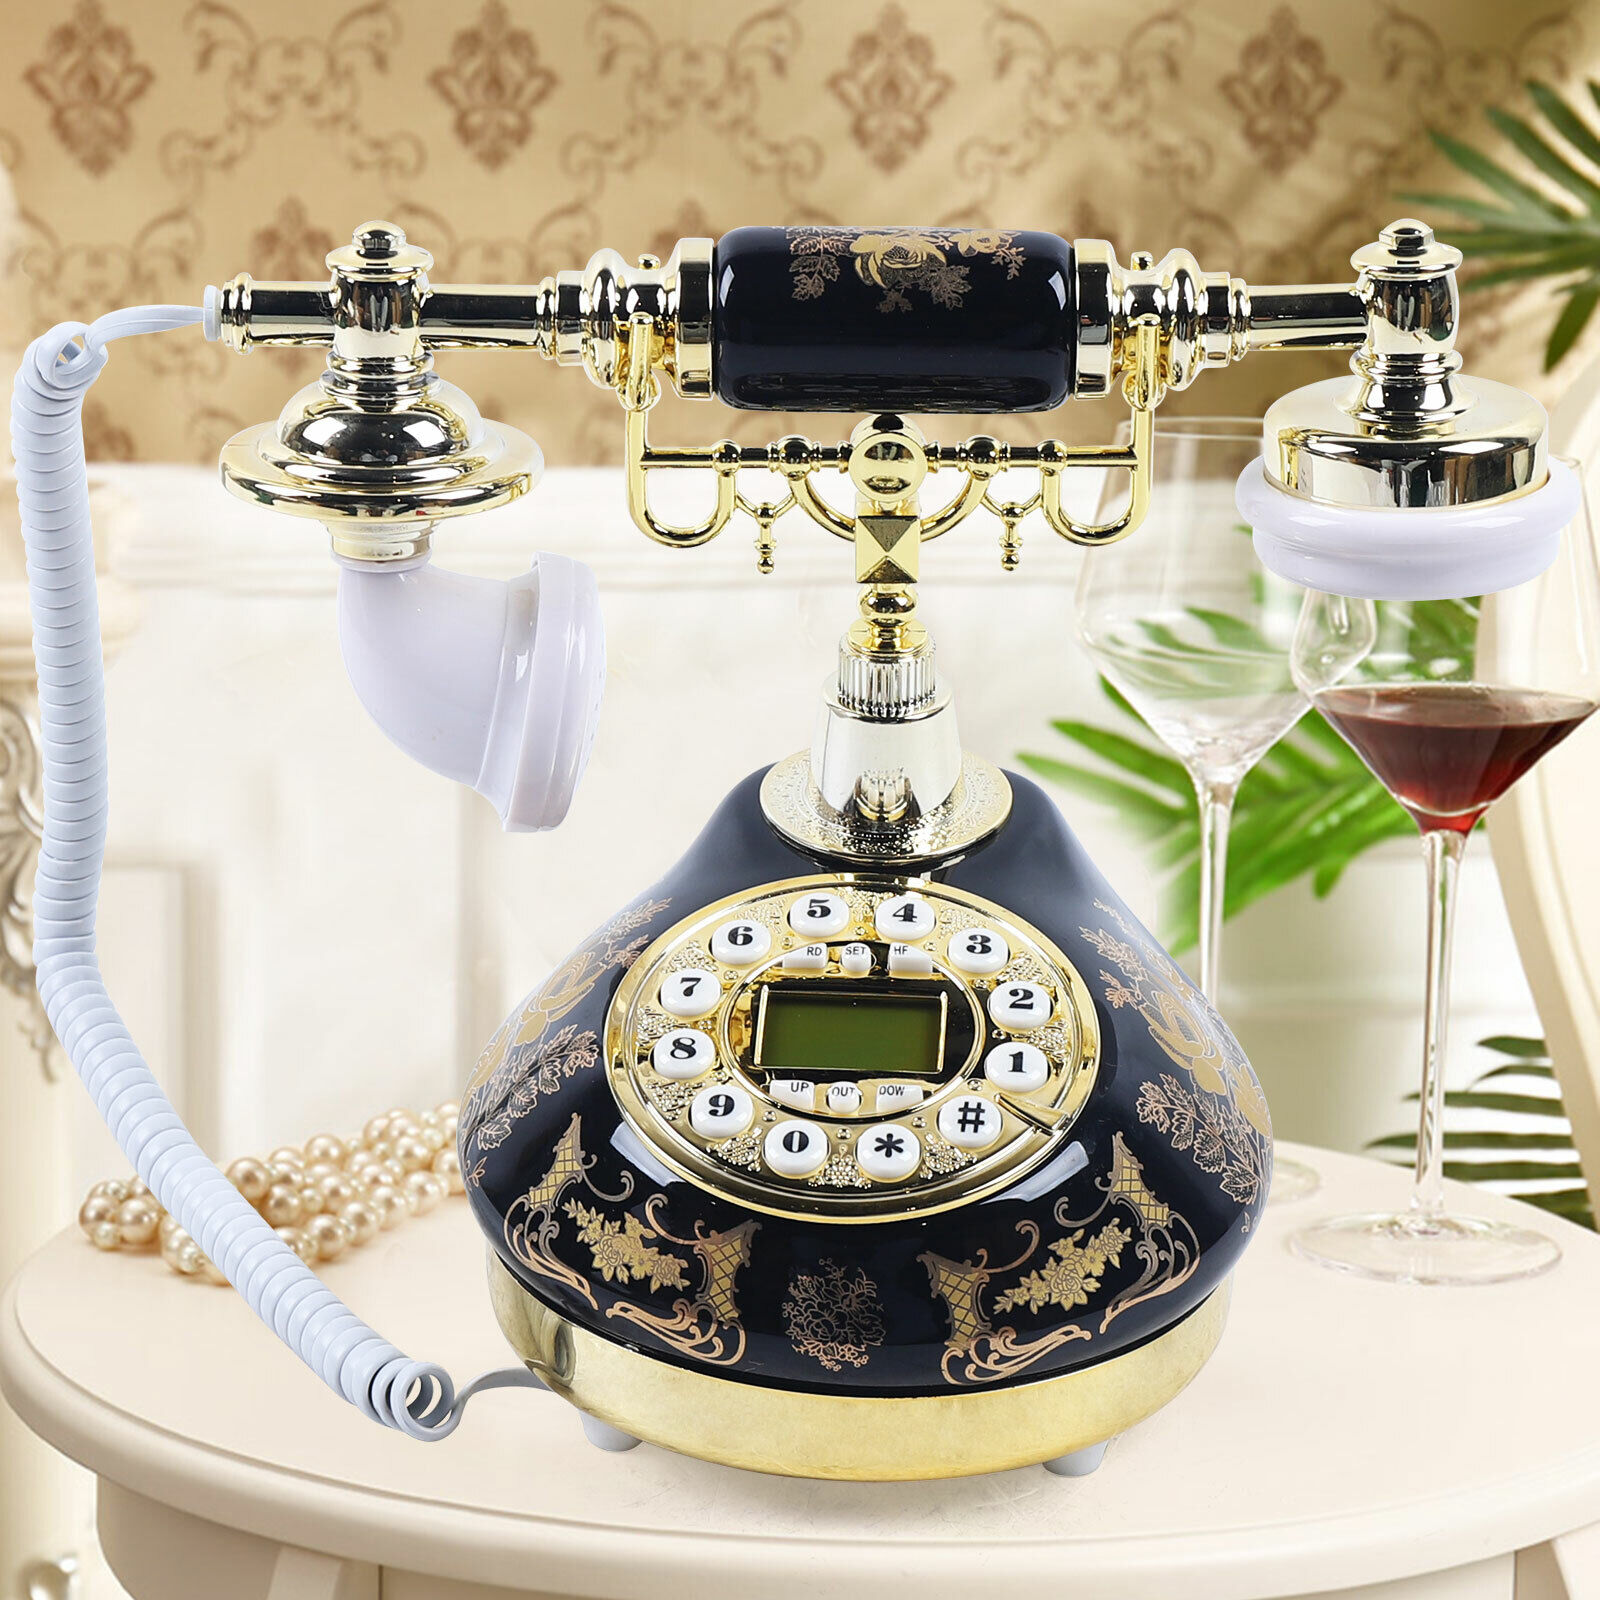 Vintage Retro Antique Style Corded Telephone Home Landline Push Button Phone USA